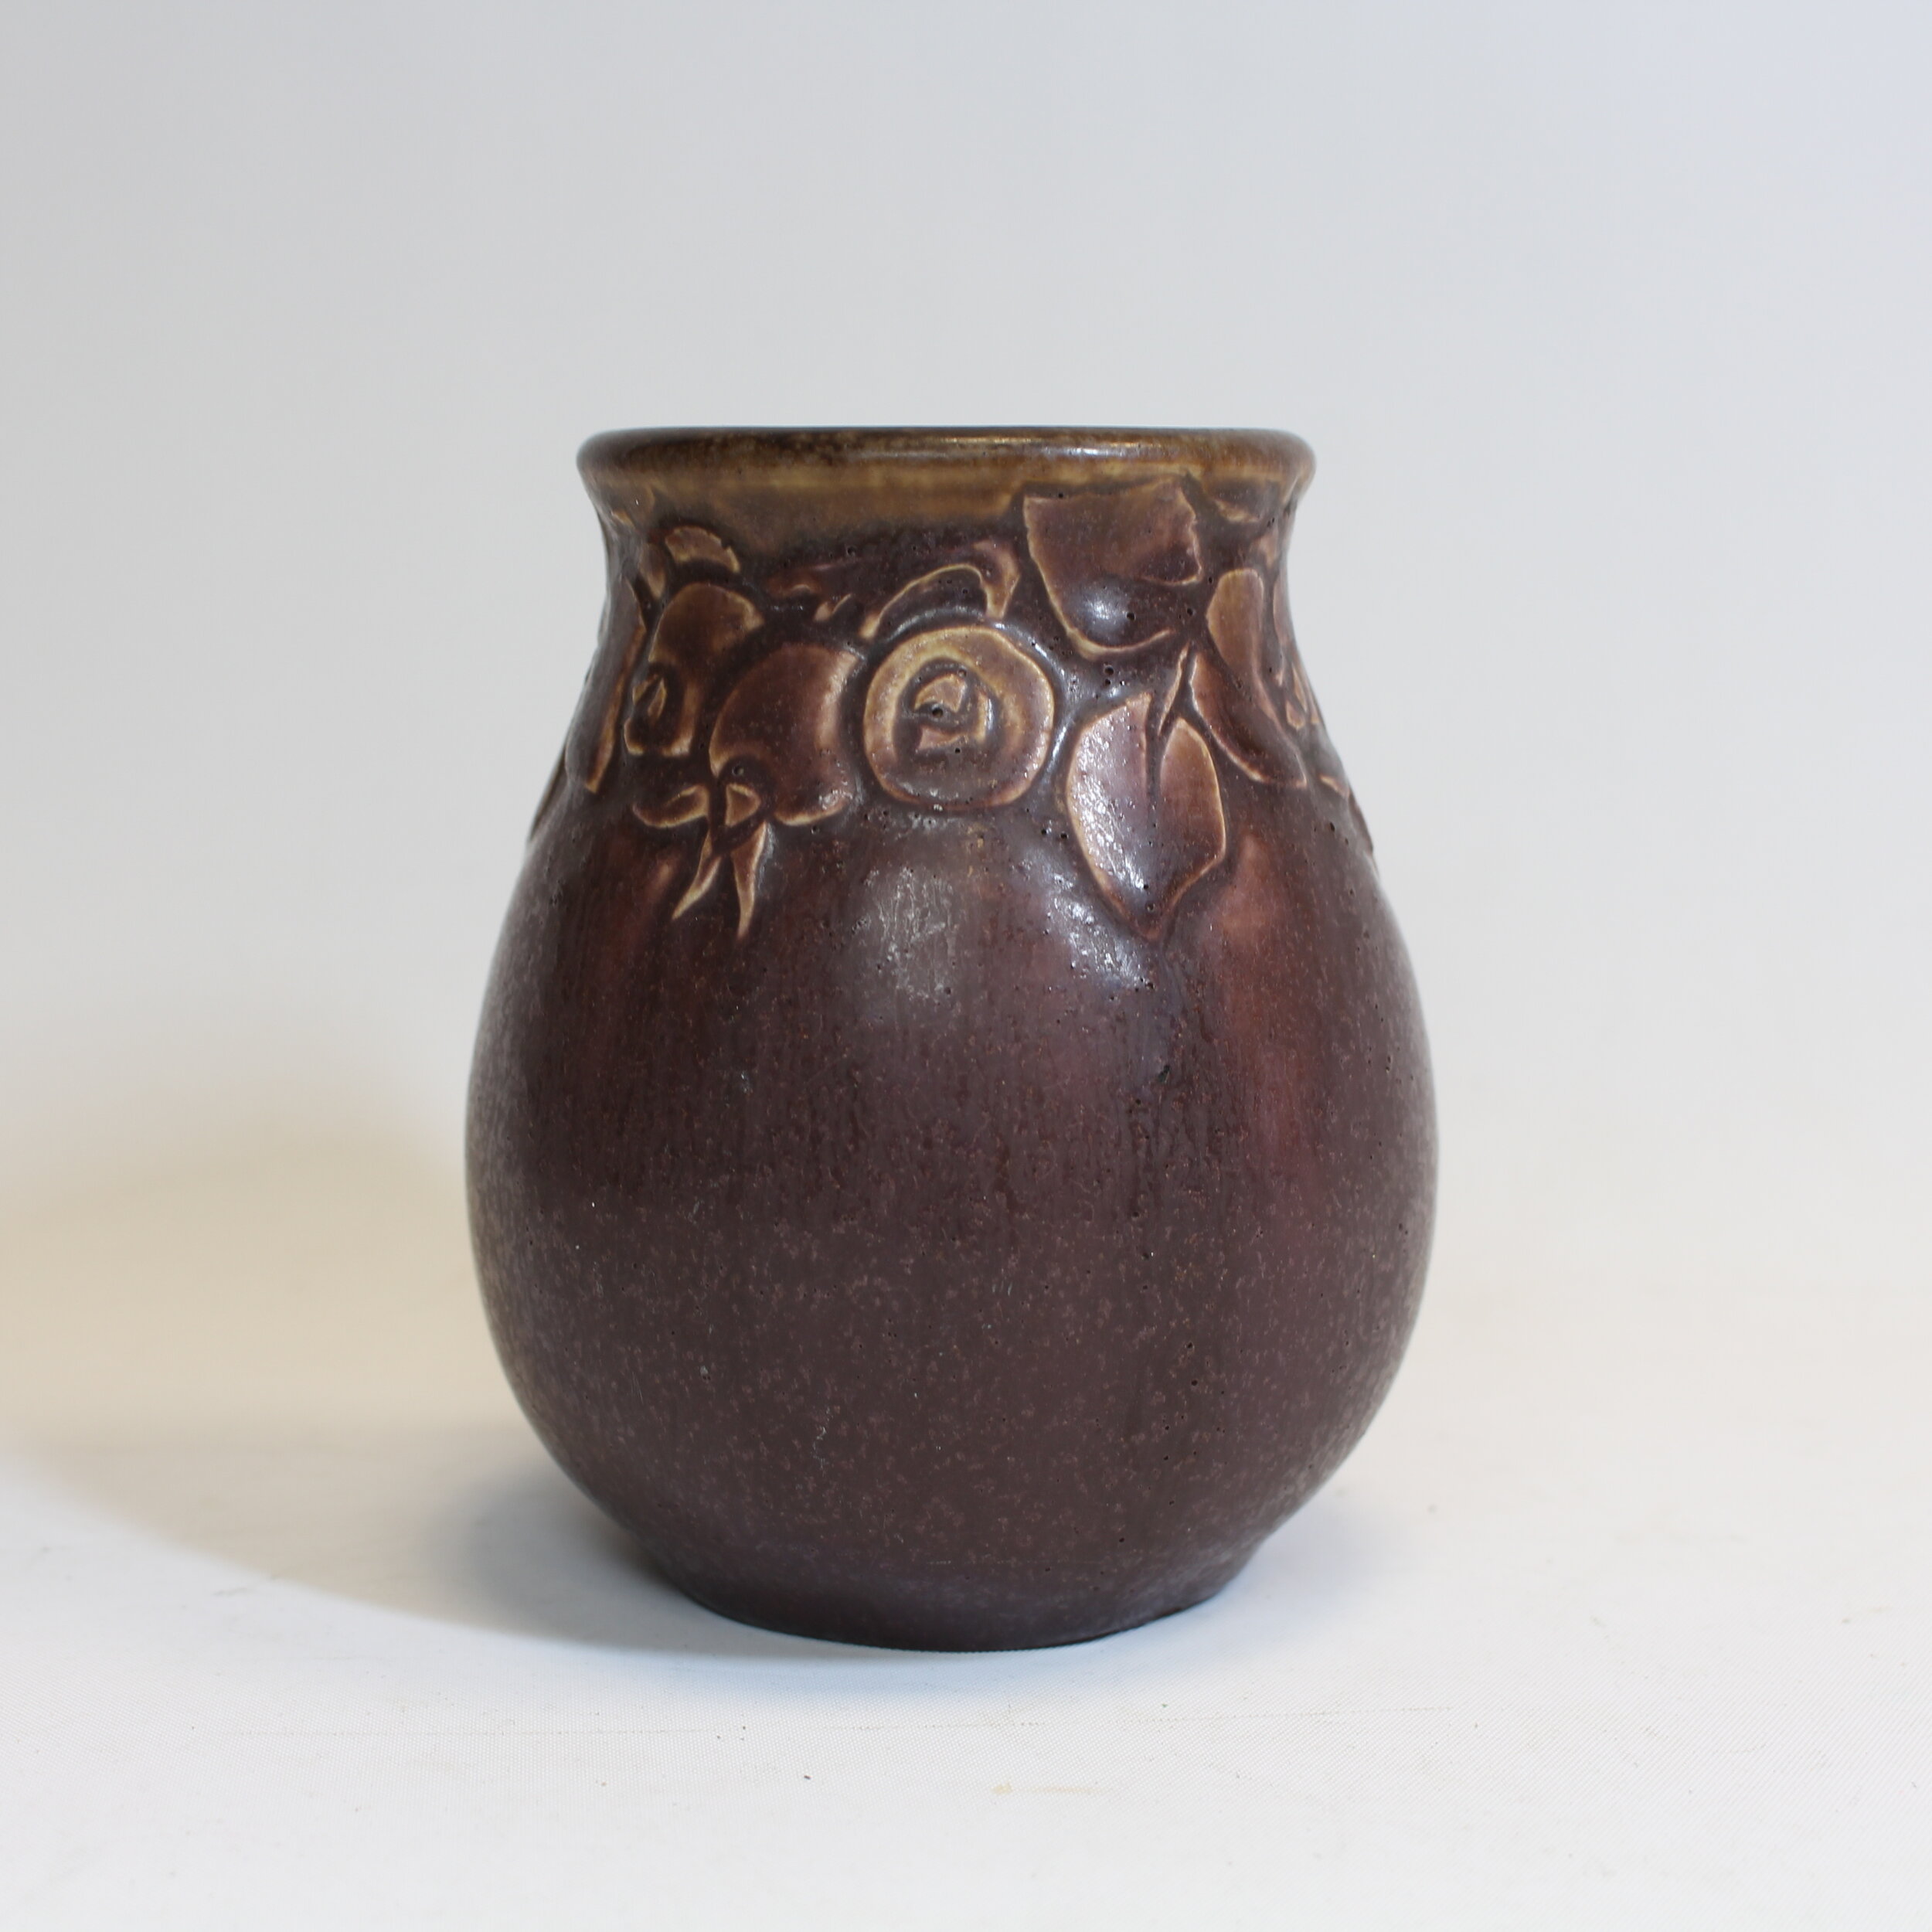 SOLD, Rookwood Pottery Vase, No. 2122